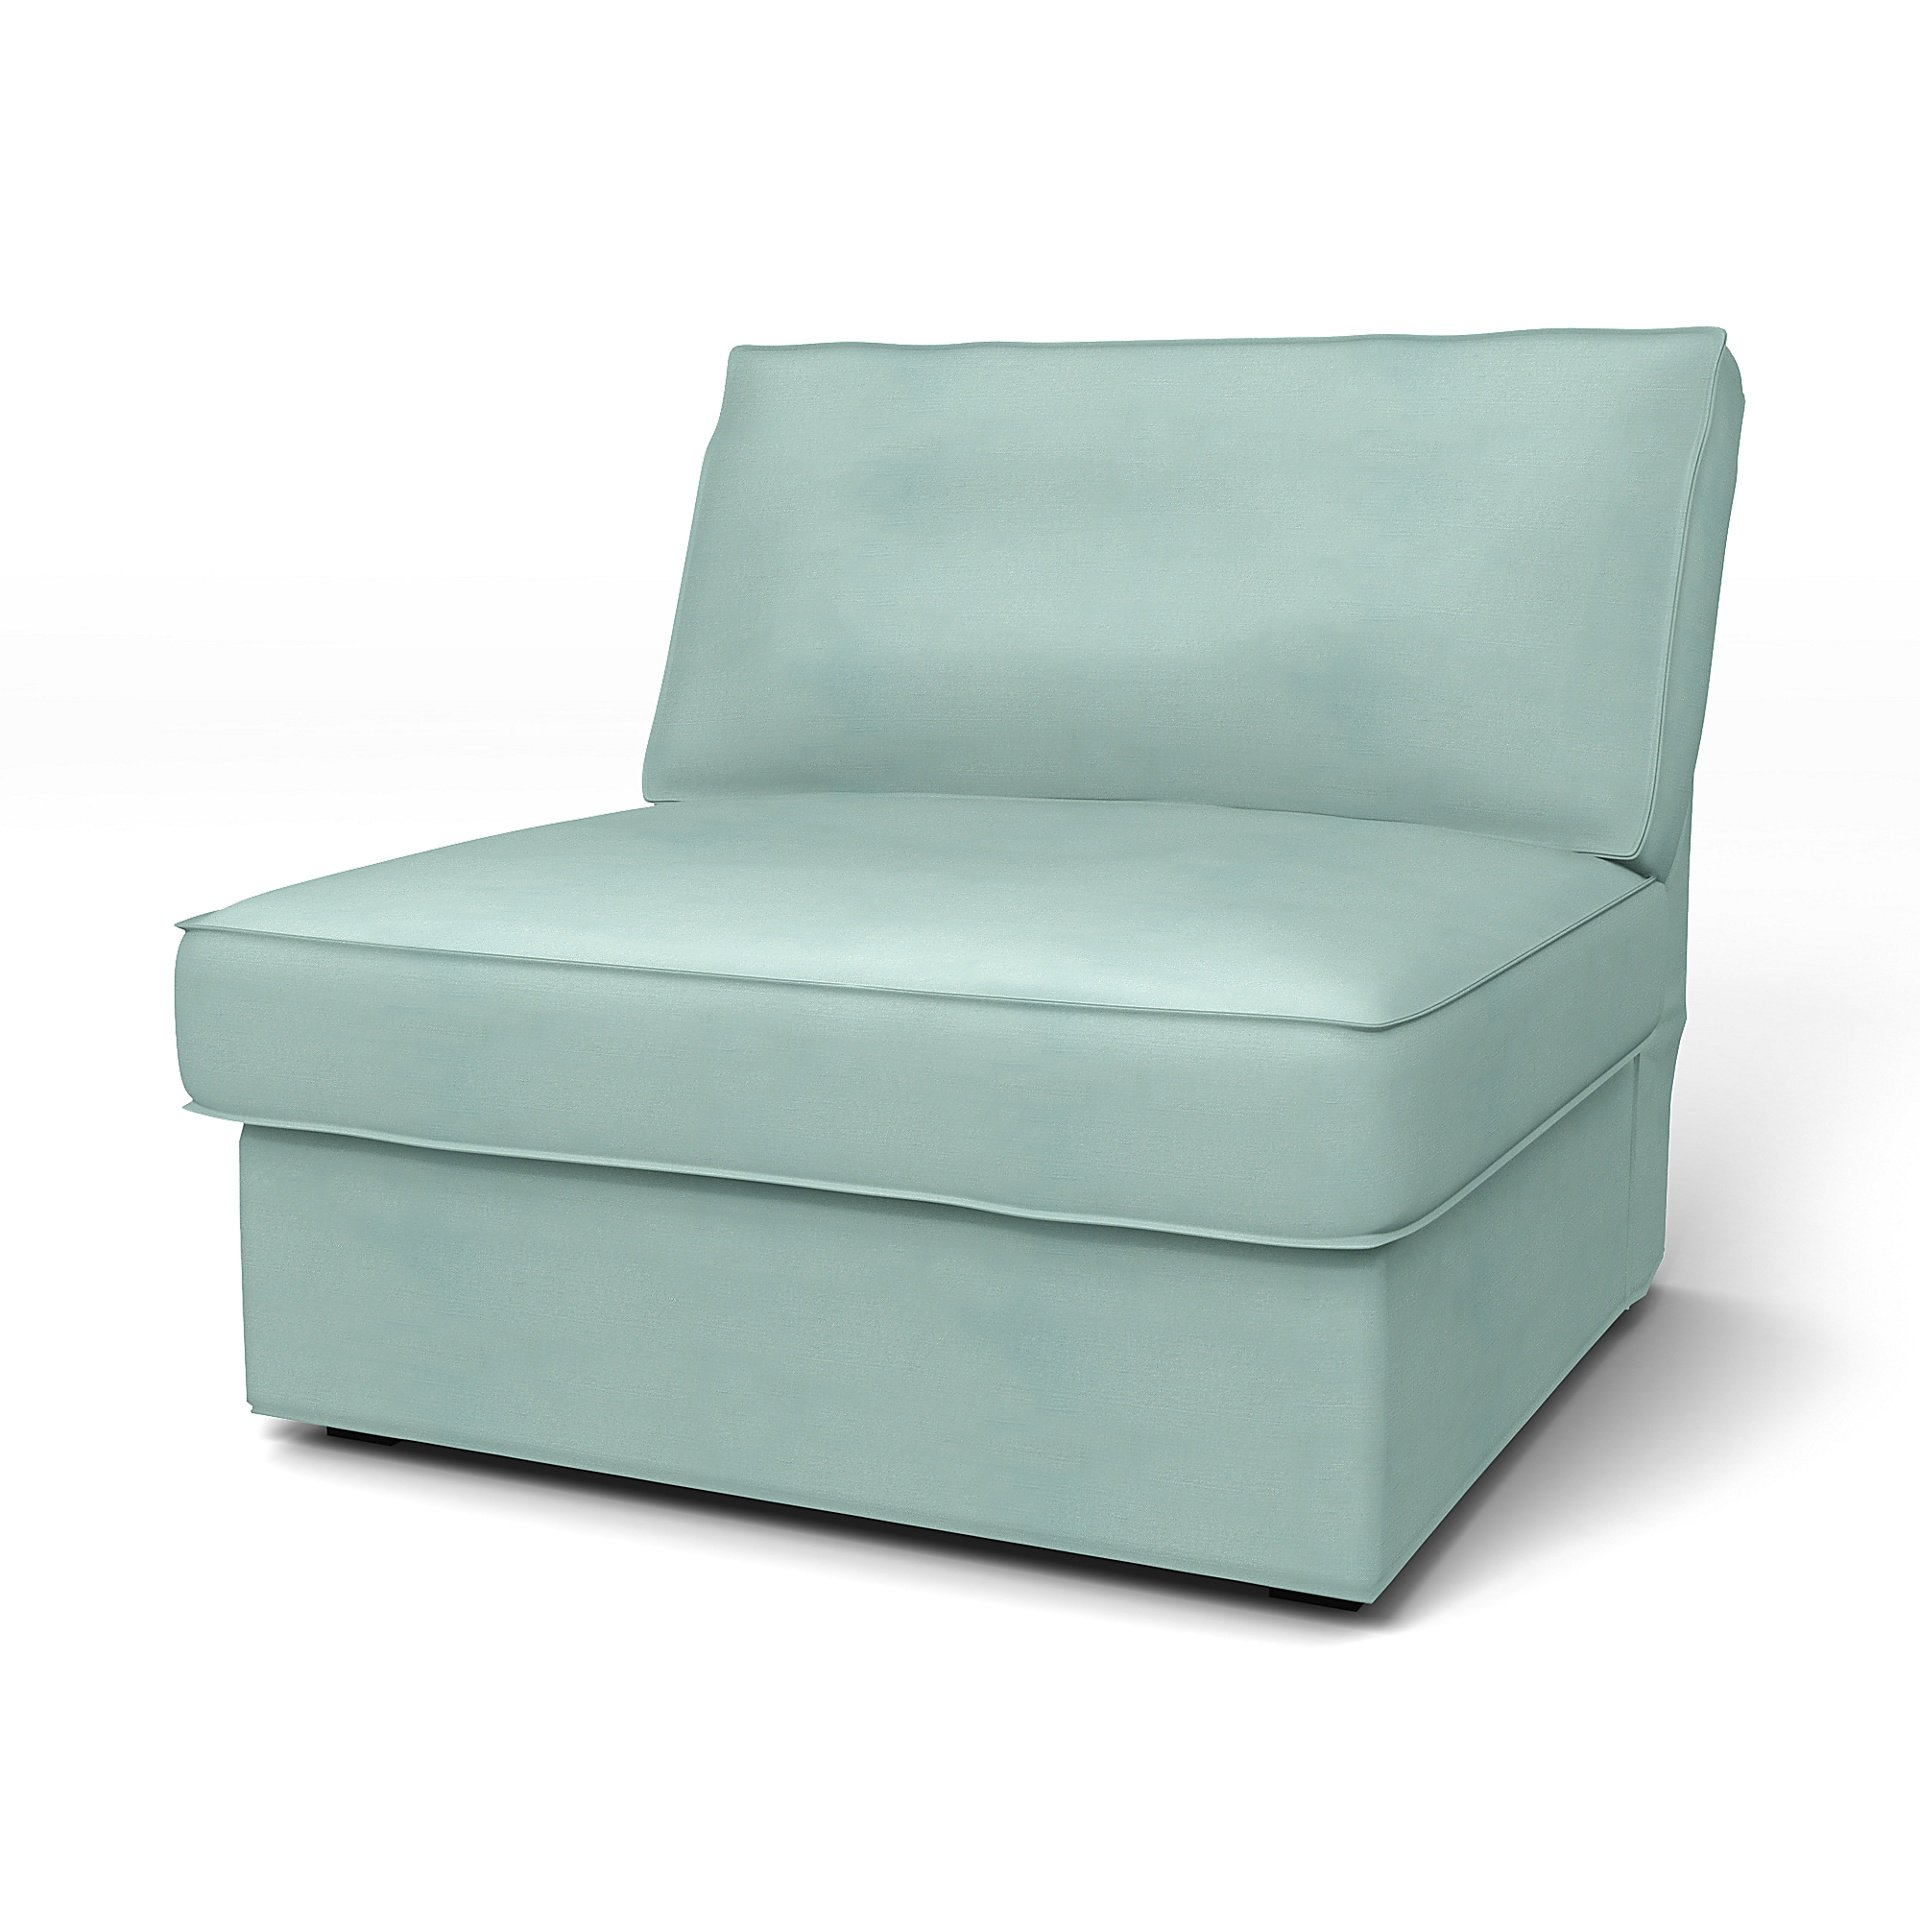 IKEA - Kivik 1 Seater Chair Cover, Mineral Blue, Linen - Bemz